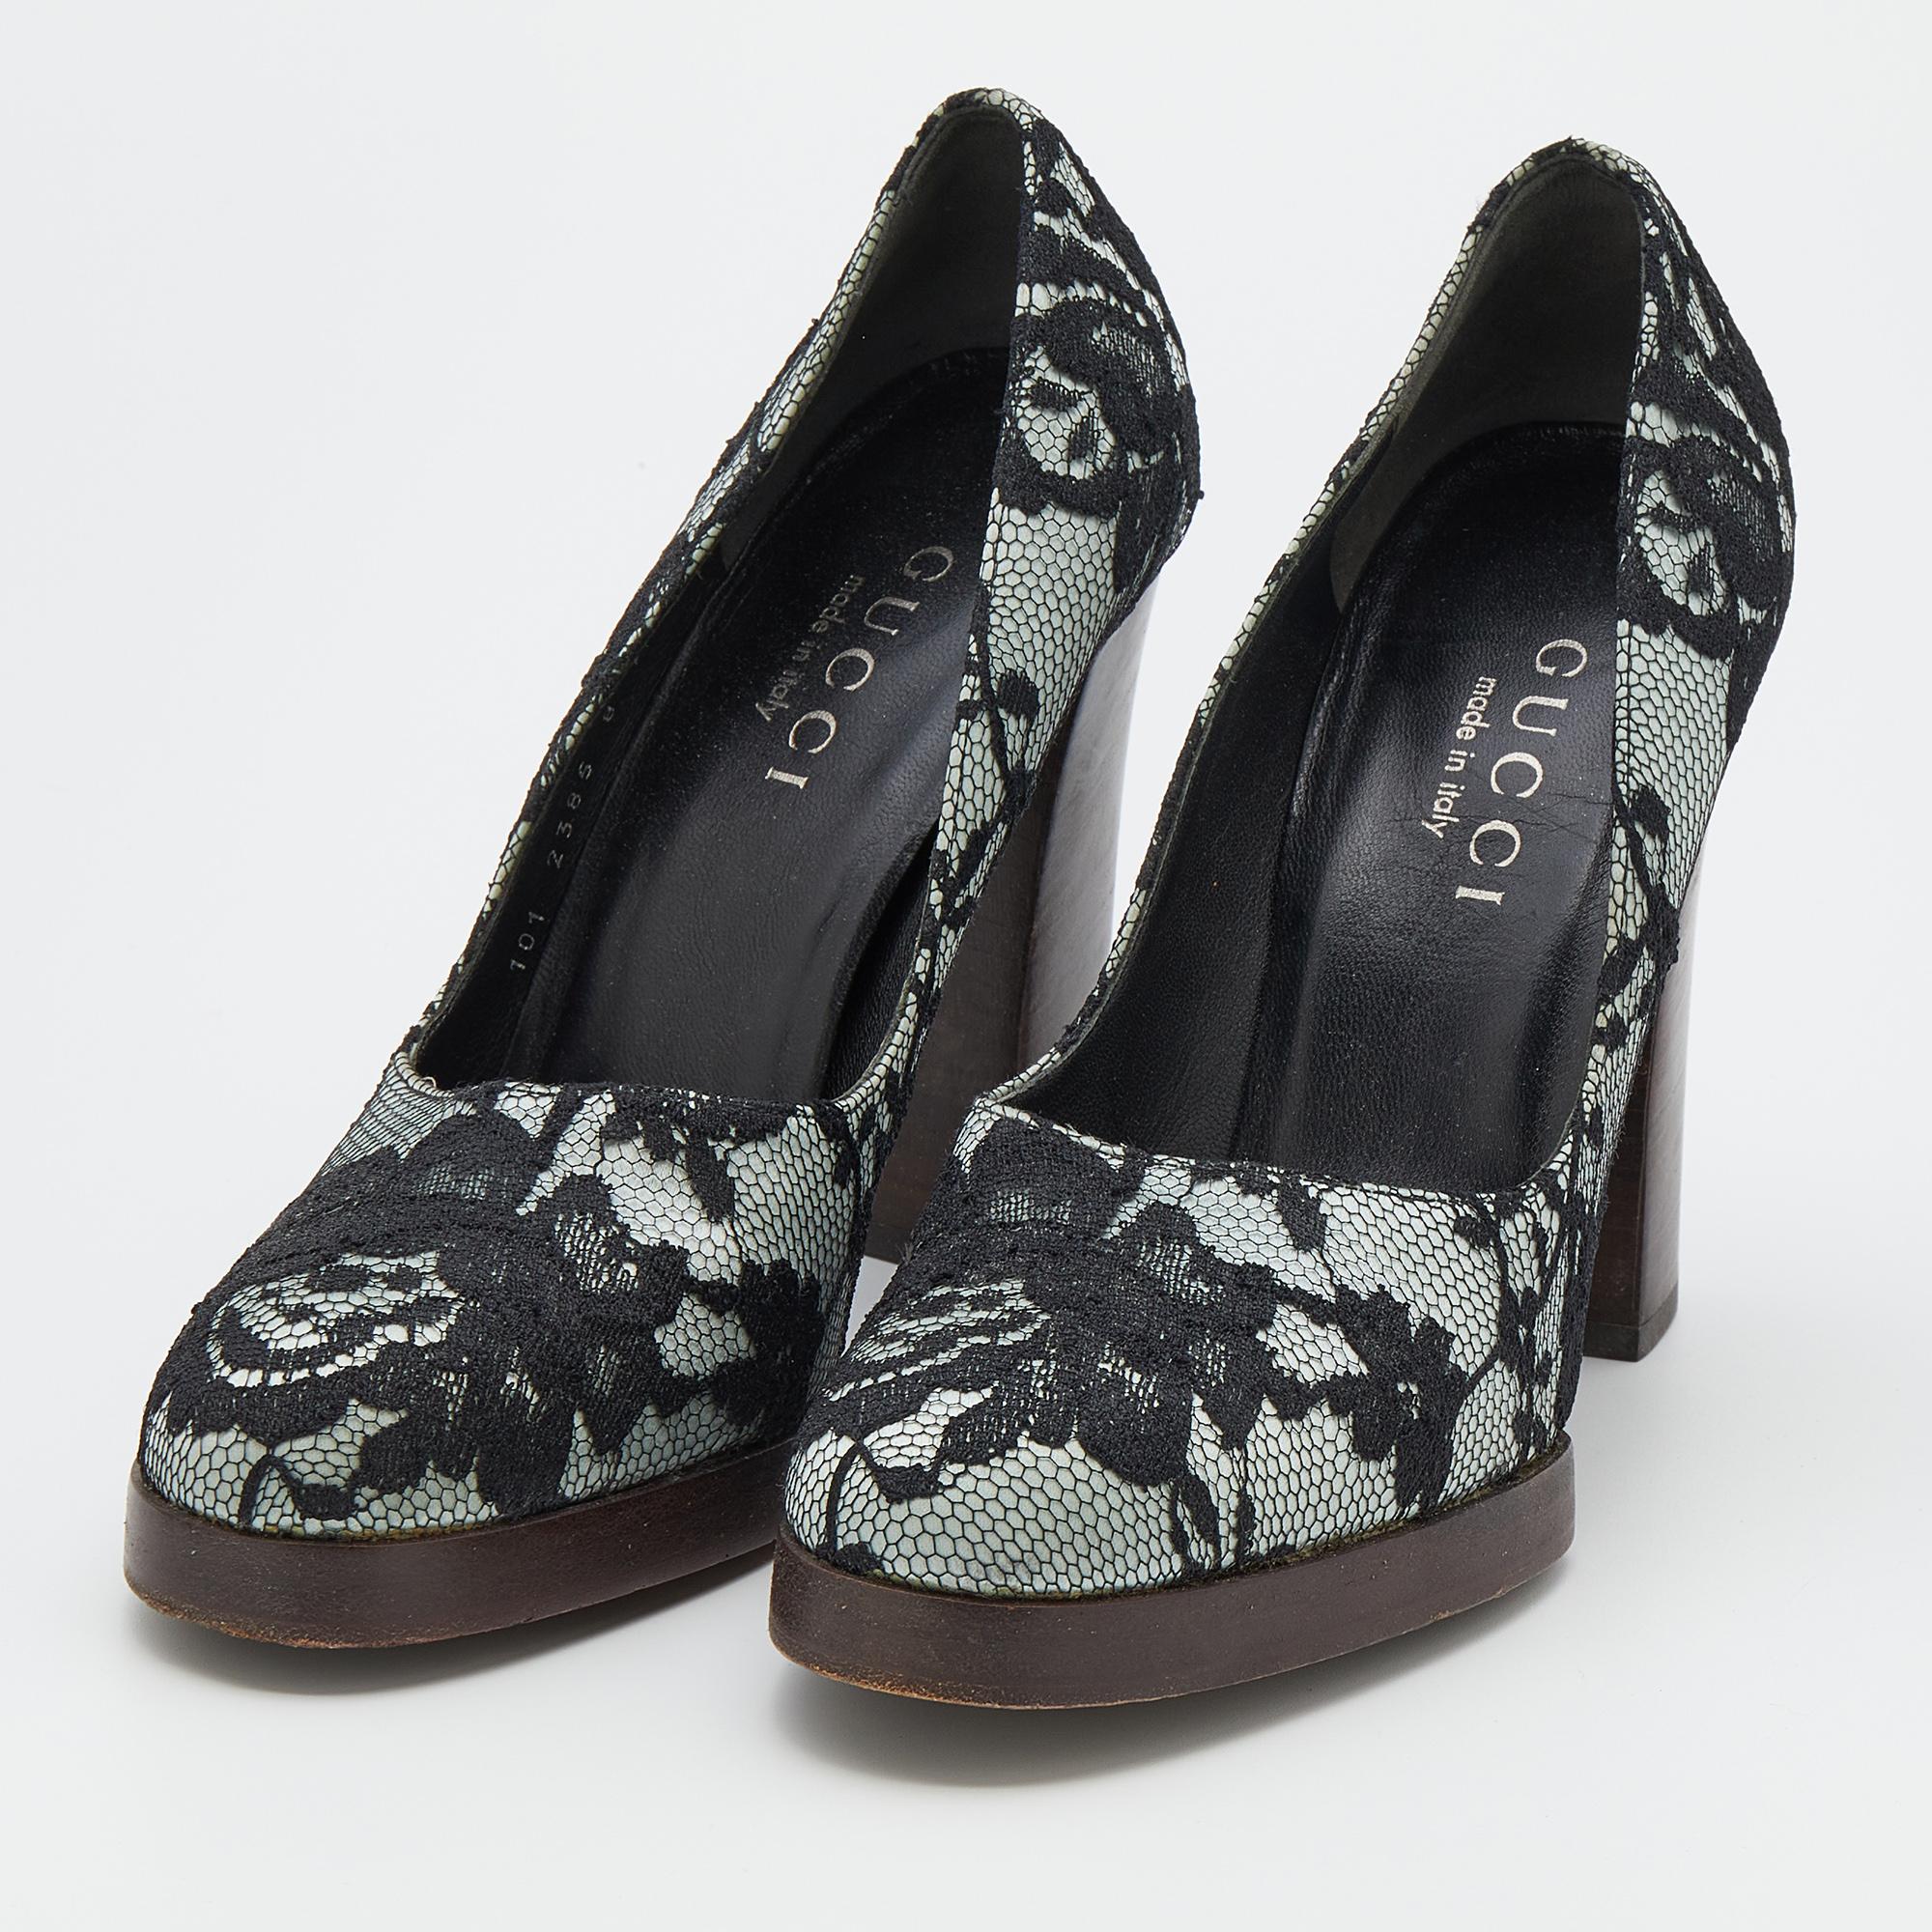 Gucci Black/Grey Floral Lace And Satin Block Heel Pumps Size 36 In Good Condition For Sale In Dubai, Al Qouz 2